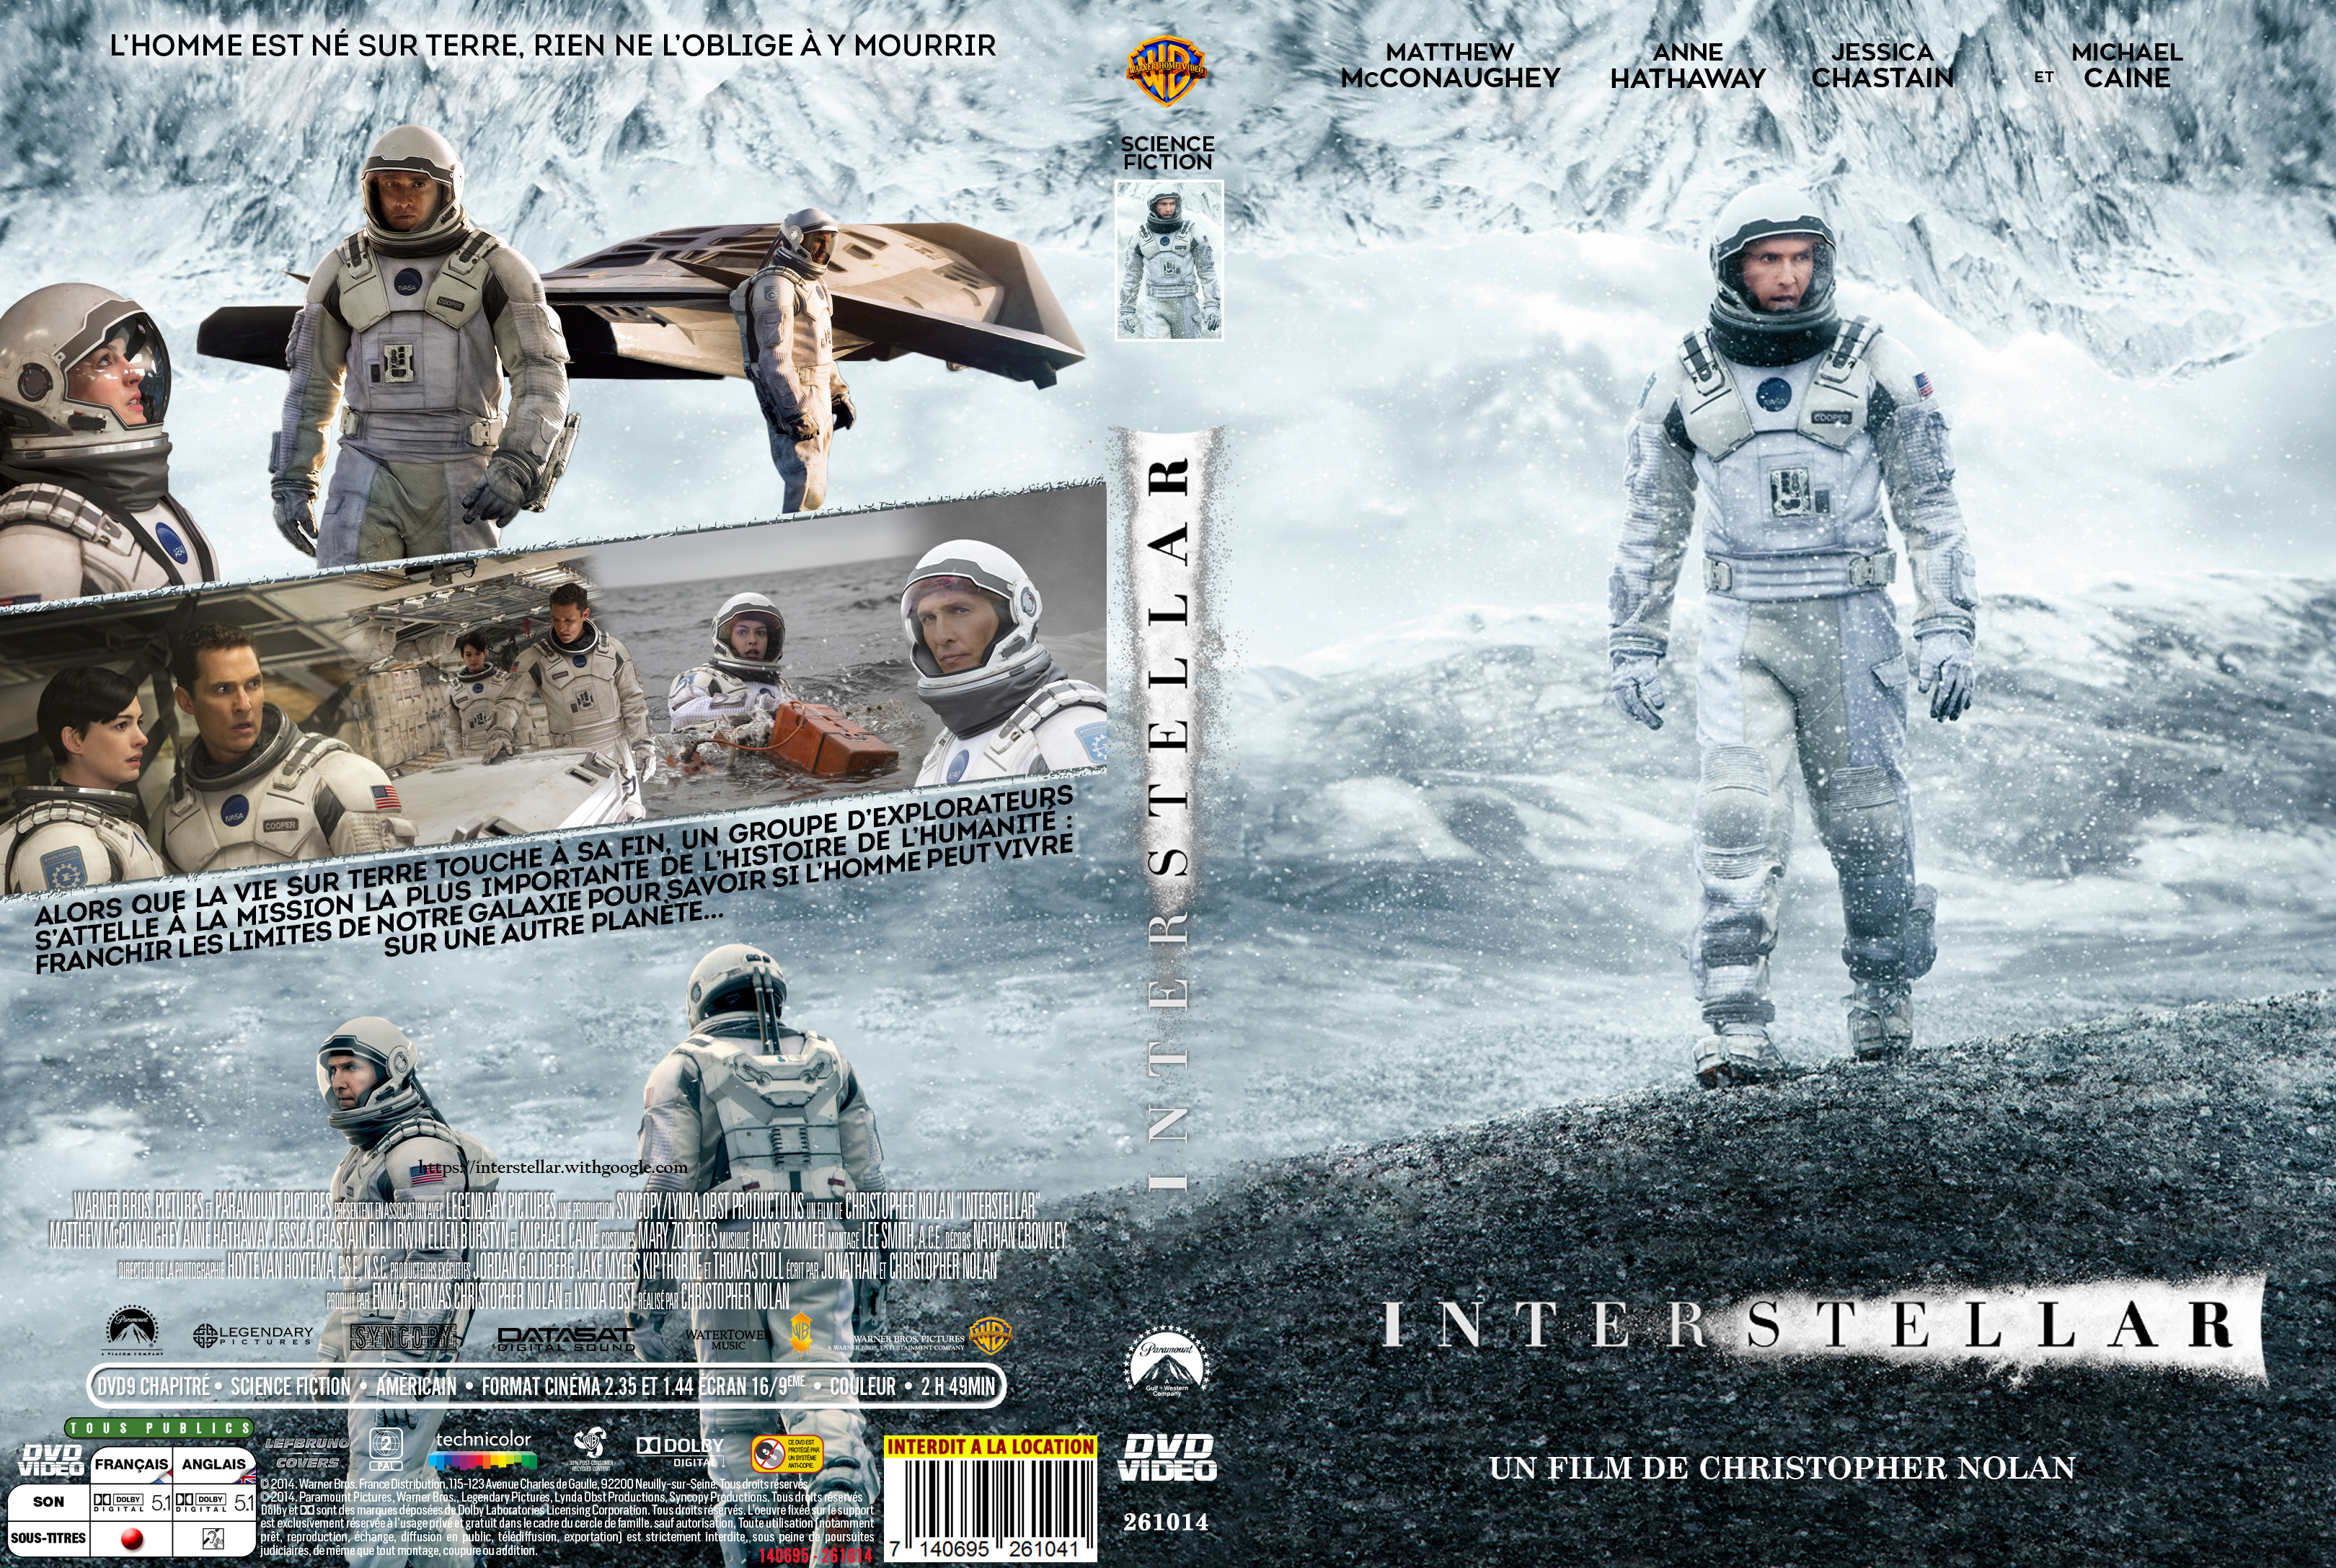 Jaquette DVD Interstellar custom